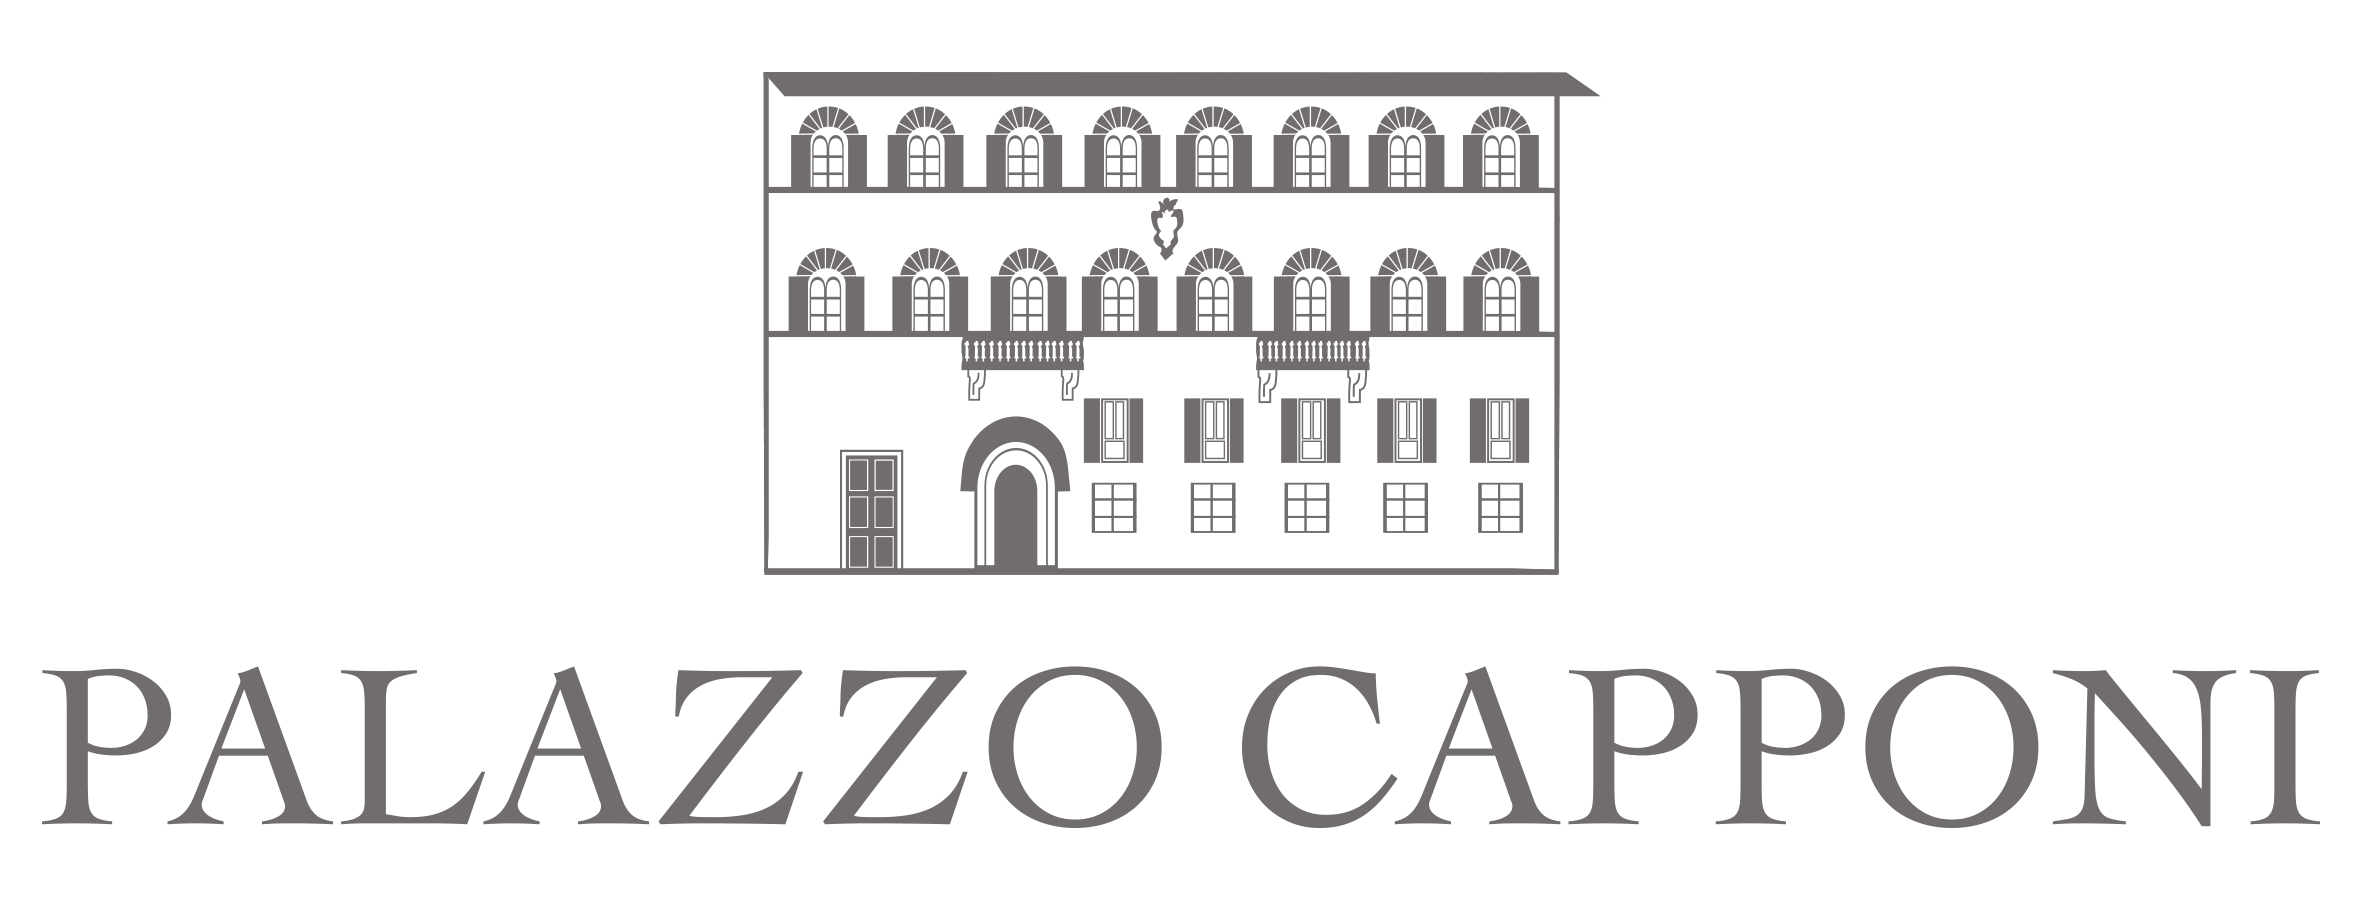 Palazzo Capponi_logo.png